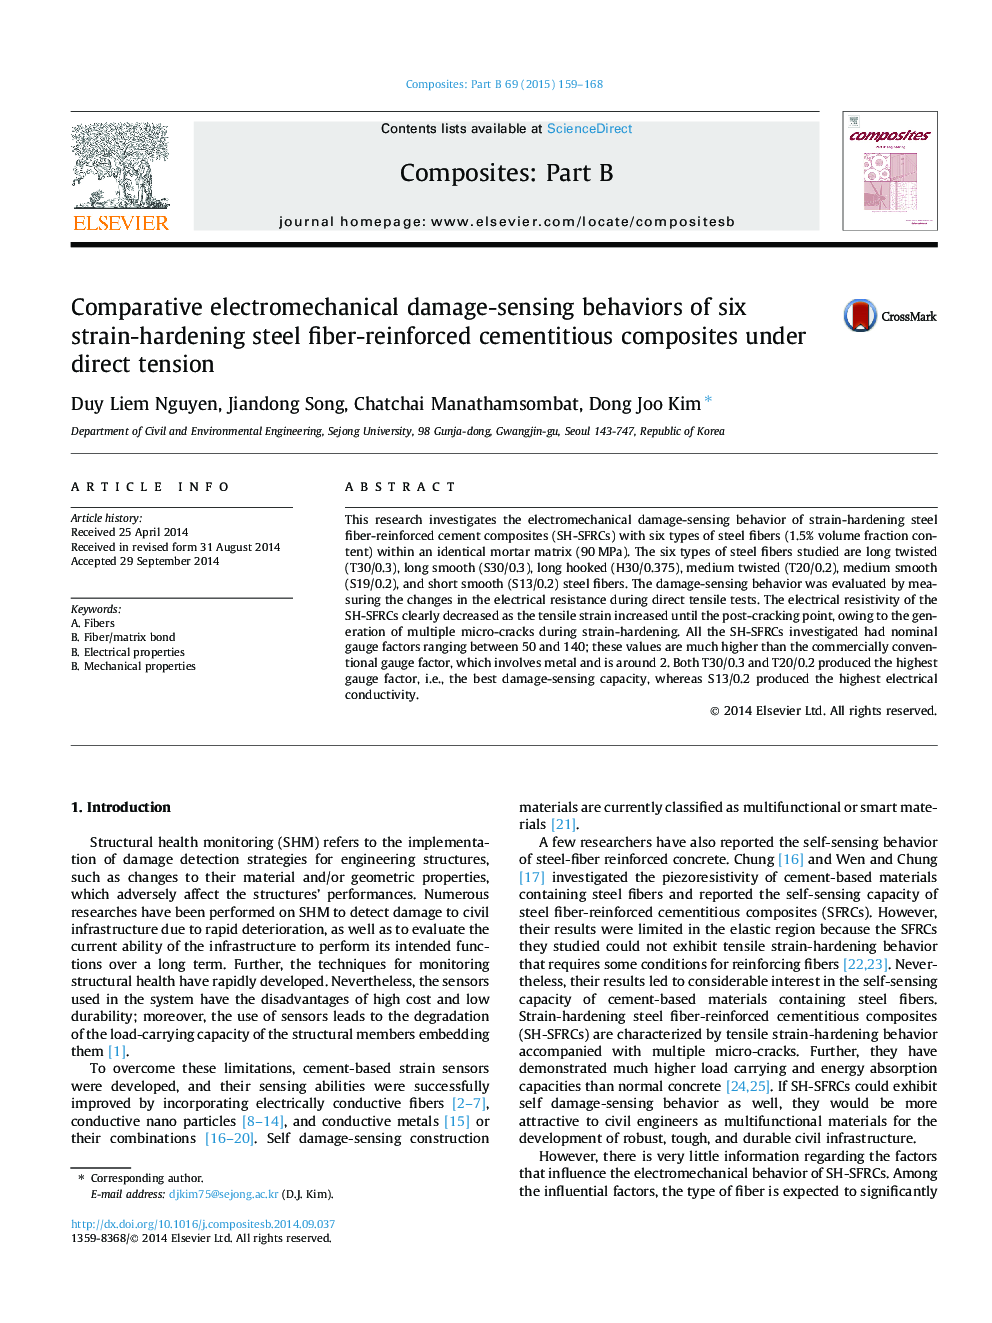 Comparative electromechanical damage-sensing behaviors of six strain-hardening steel fiber-reinforced cementitious composites under direct tension